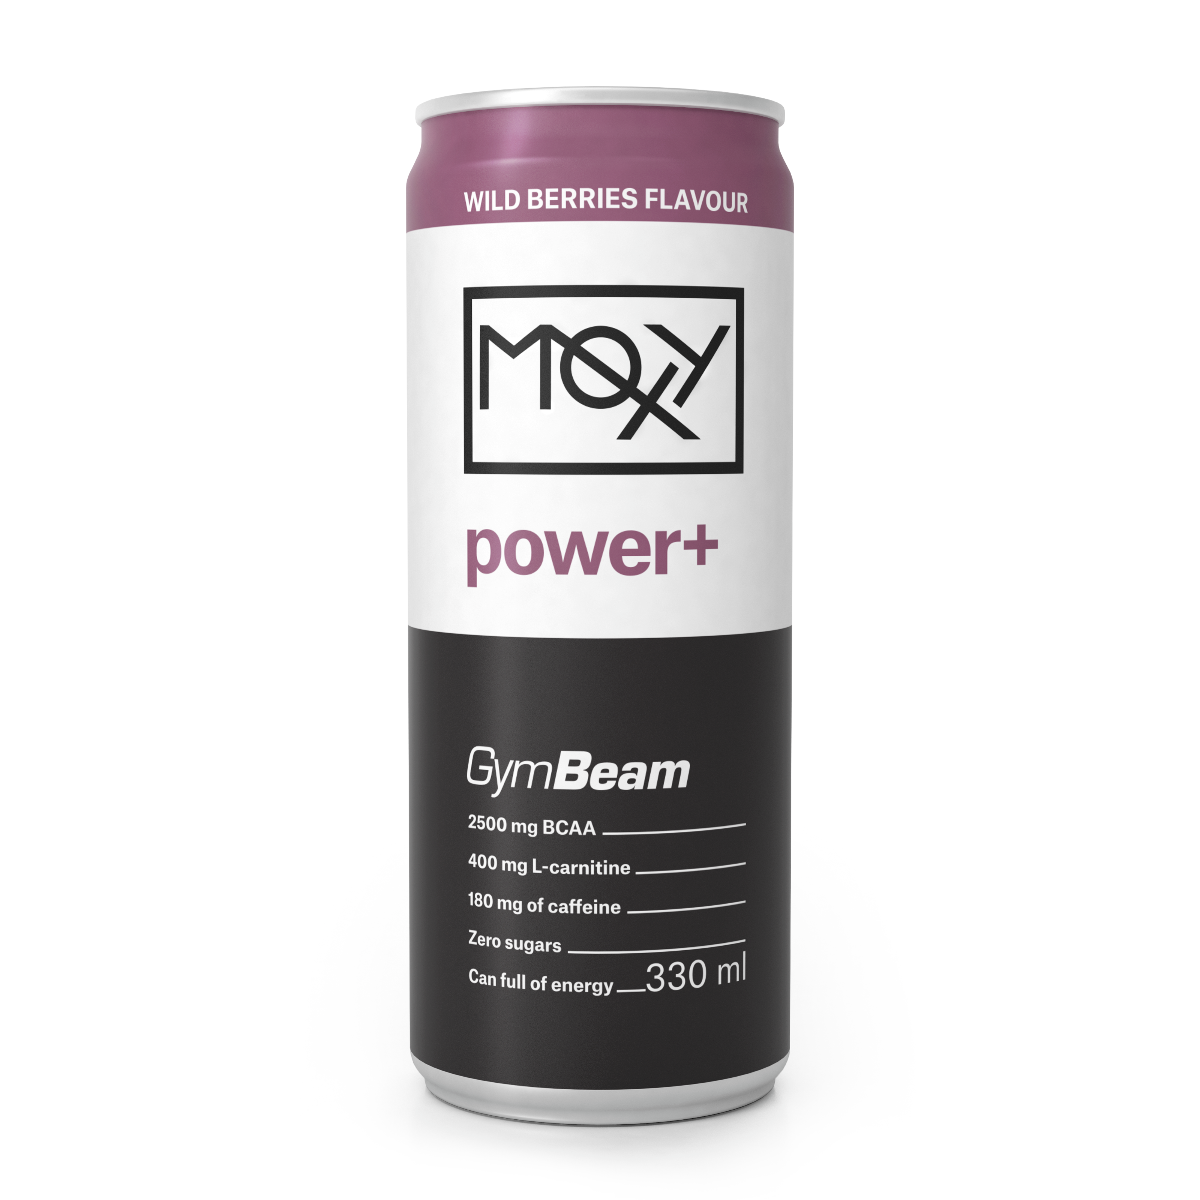 E-shop MOXY power+ Energy Drink 330 ml - GymBeam